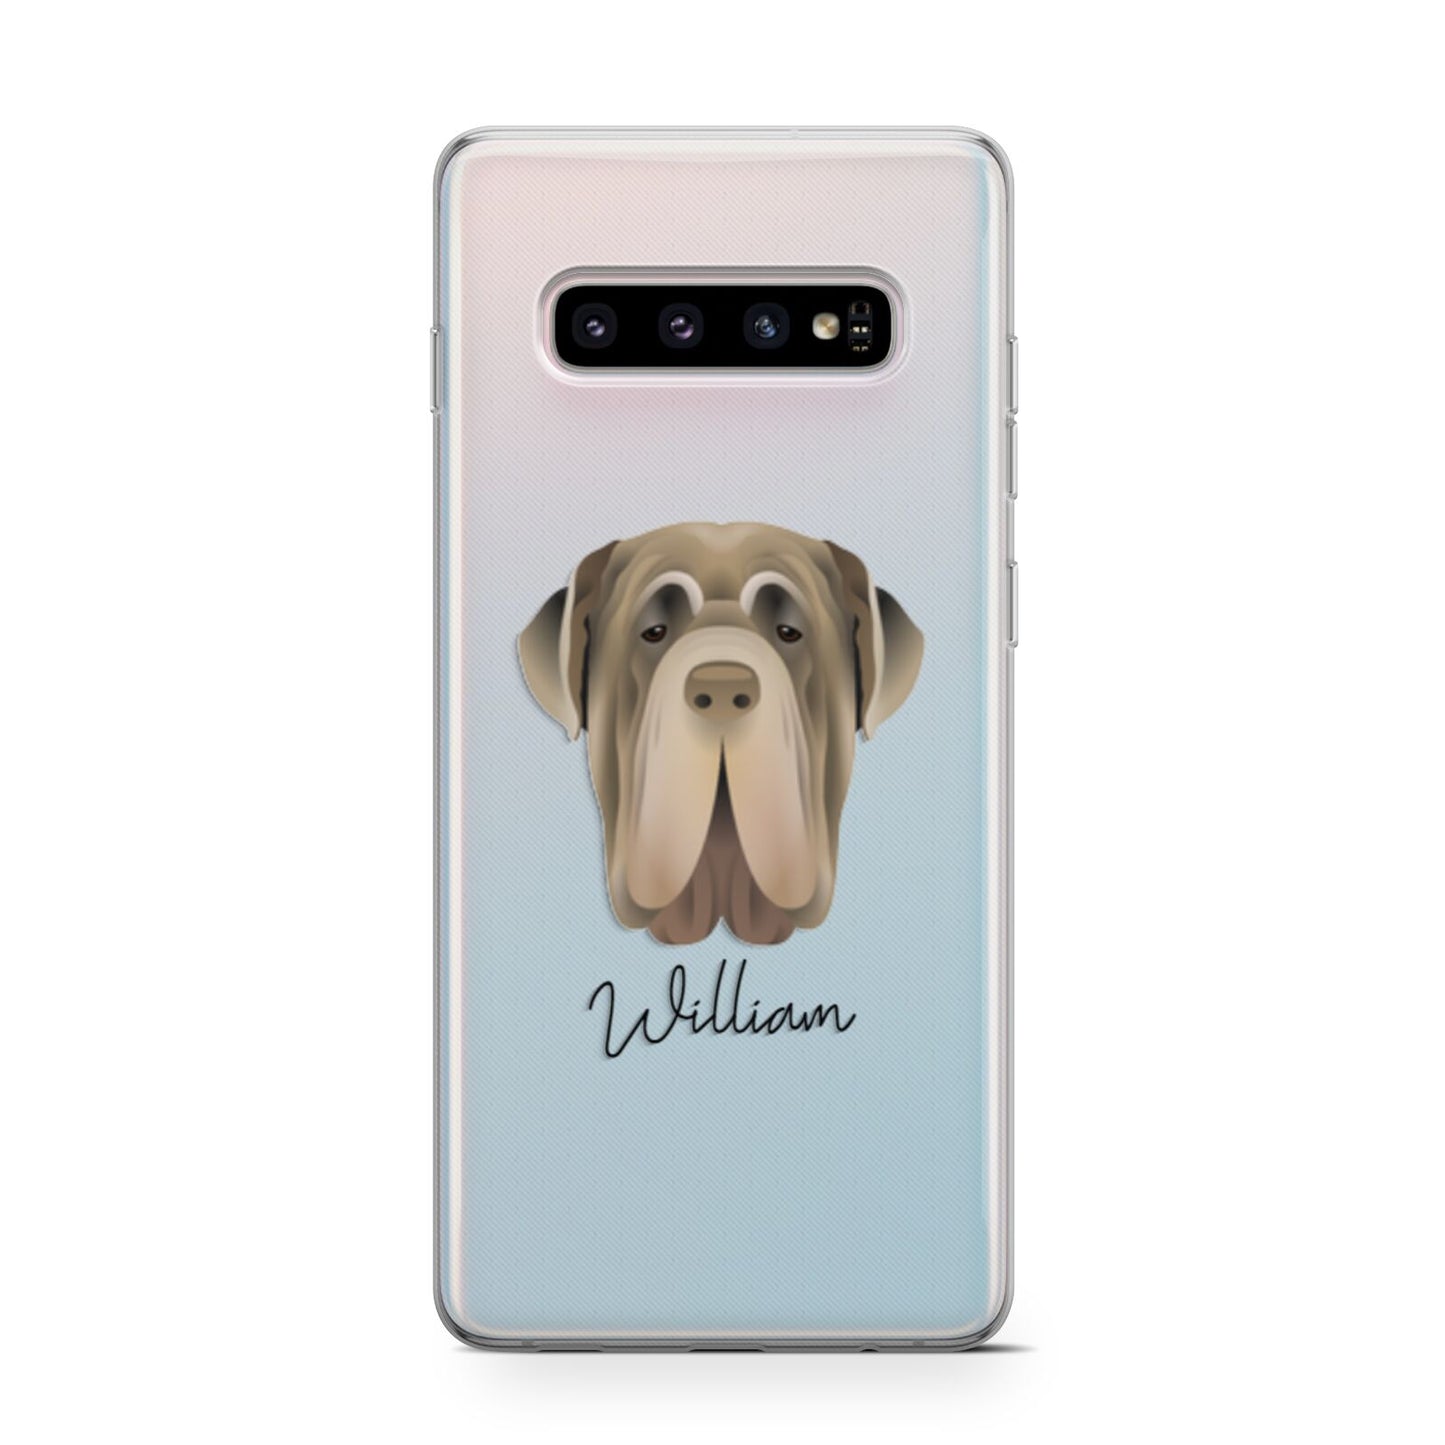 Neapolitan Mastiff Personalised Samsung Galaxy S10 Case